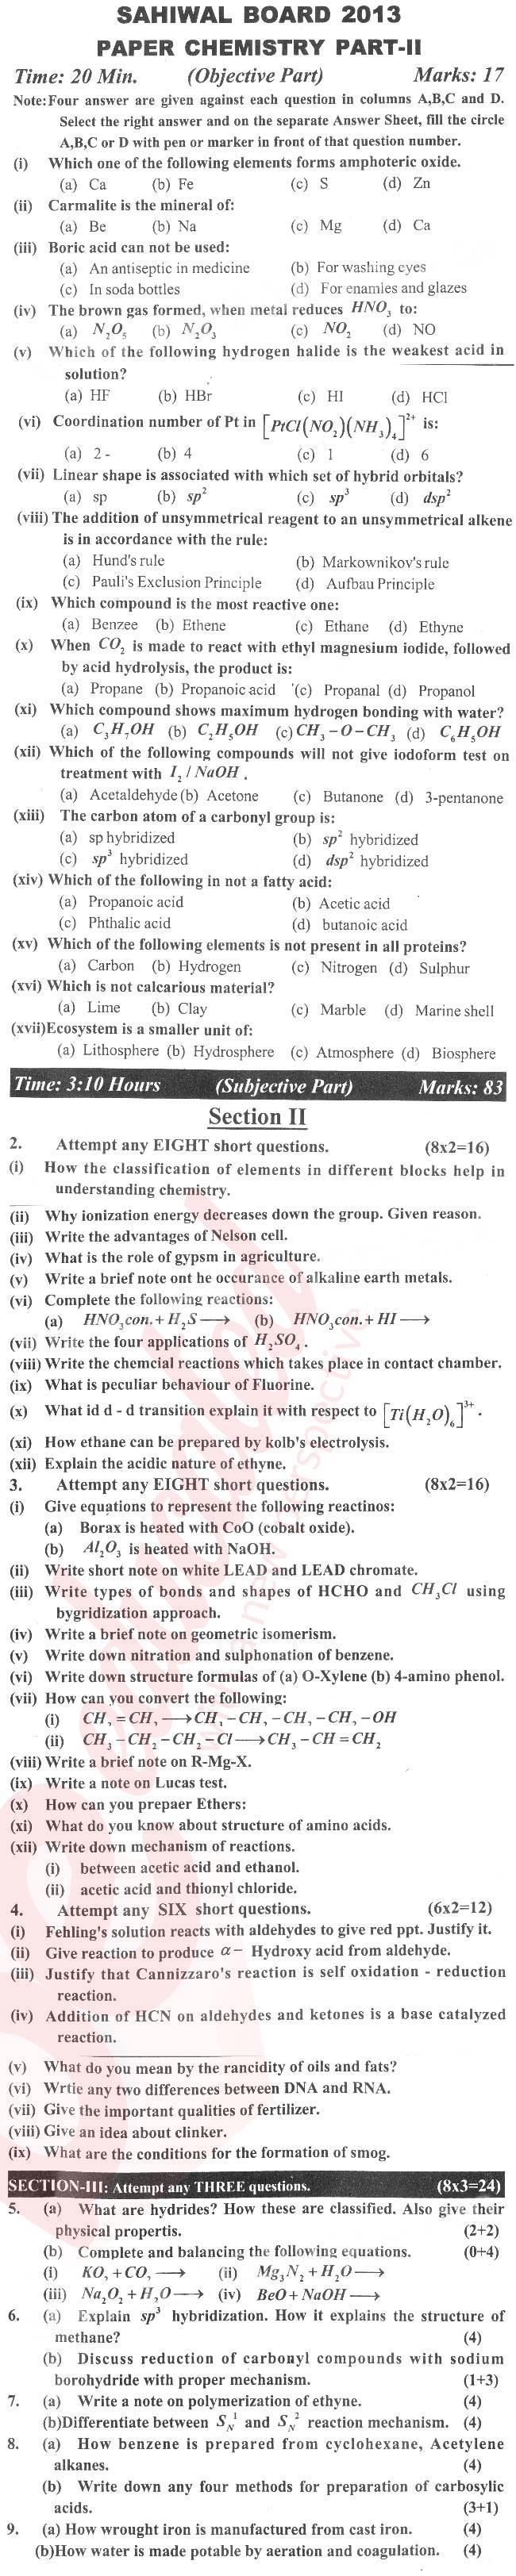 Chemistry FSC Part 2 Past Paper Group 1 BISE Sahiwal 2013